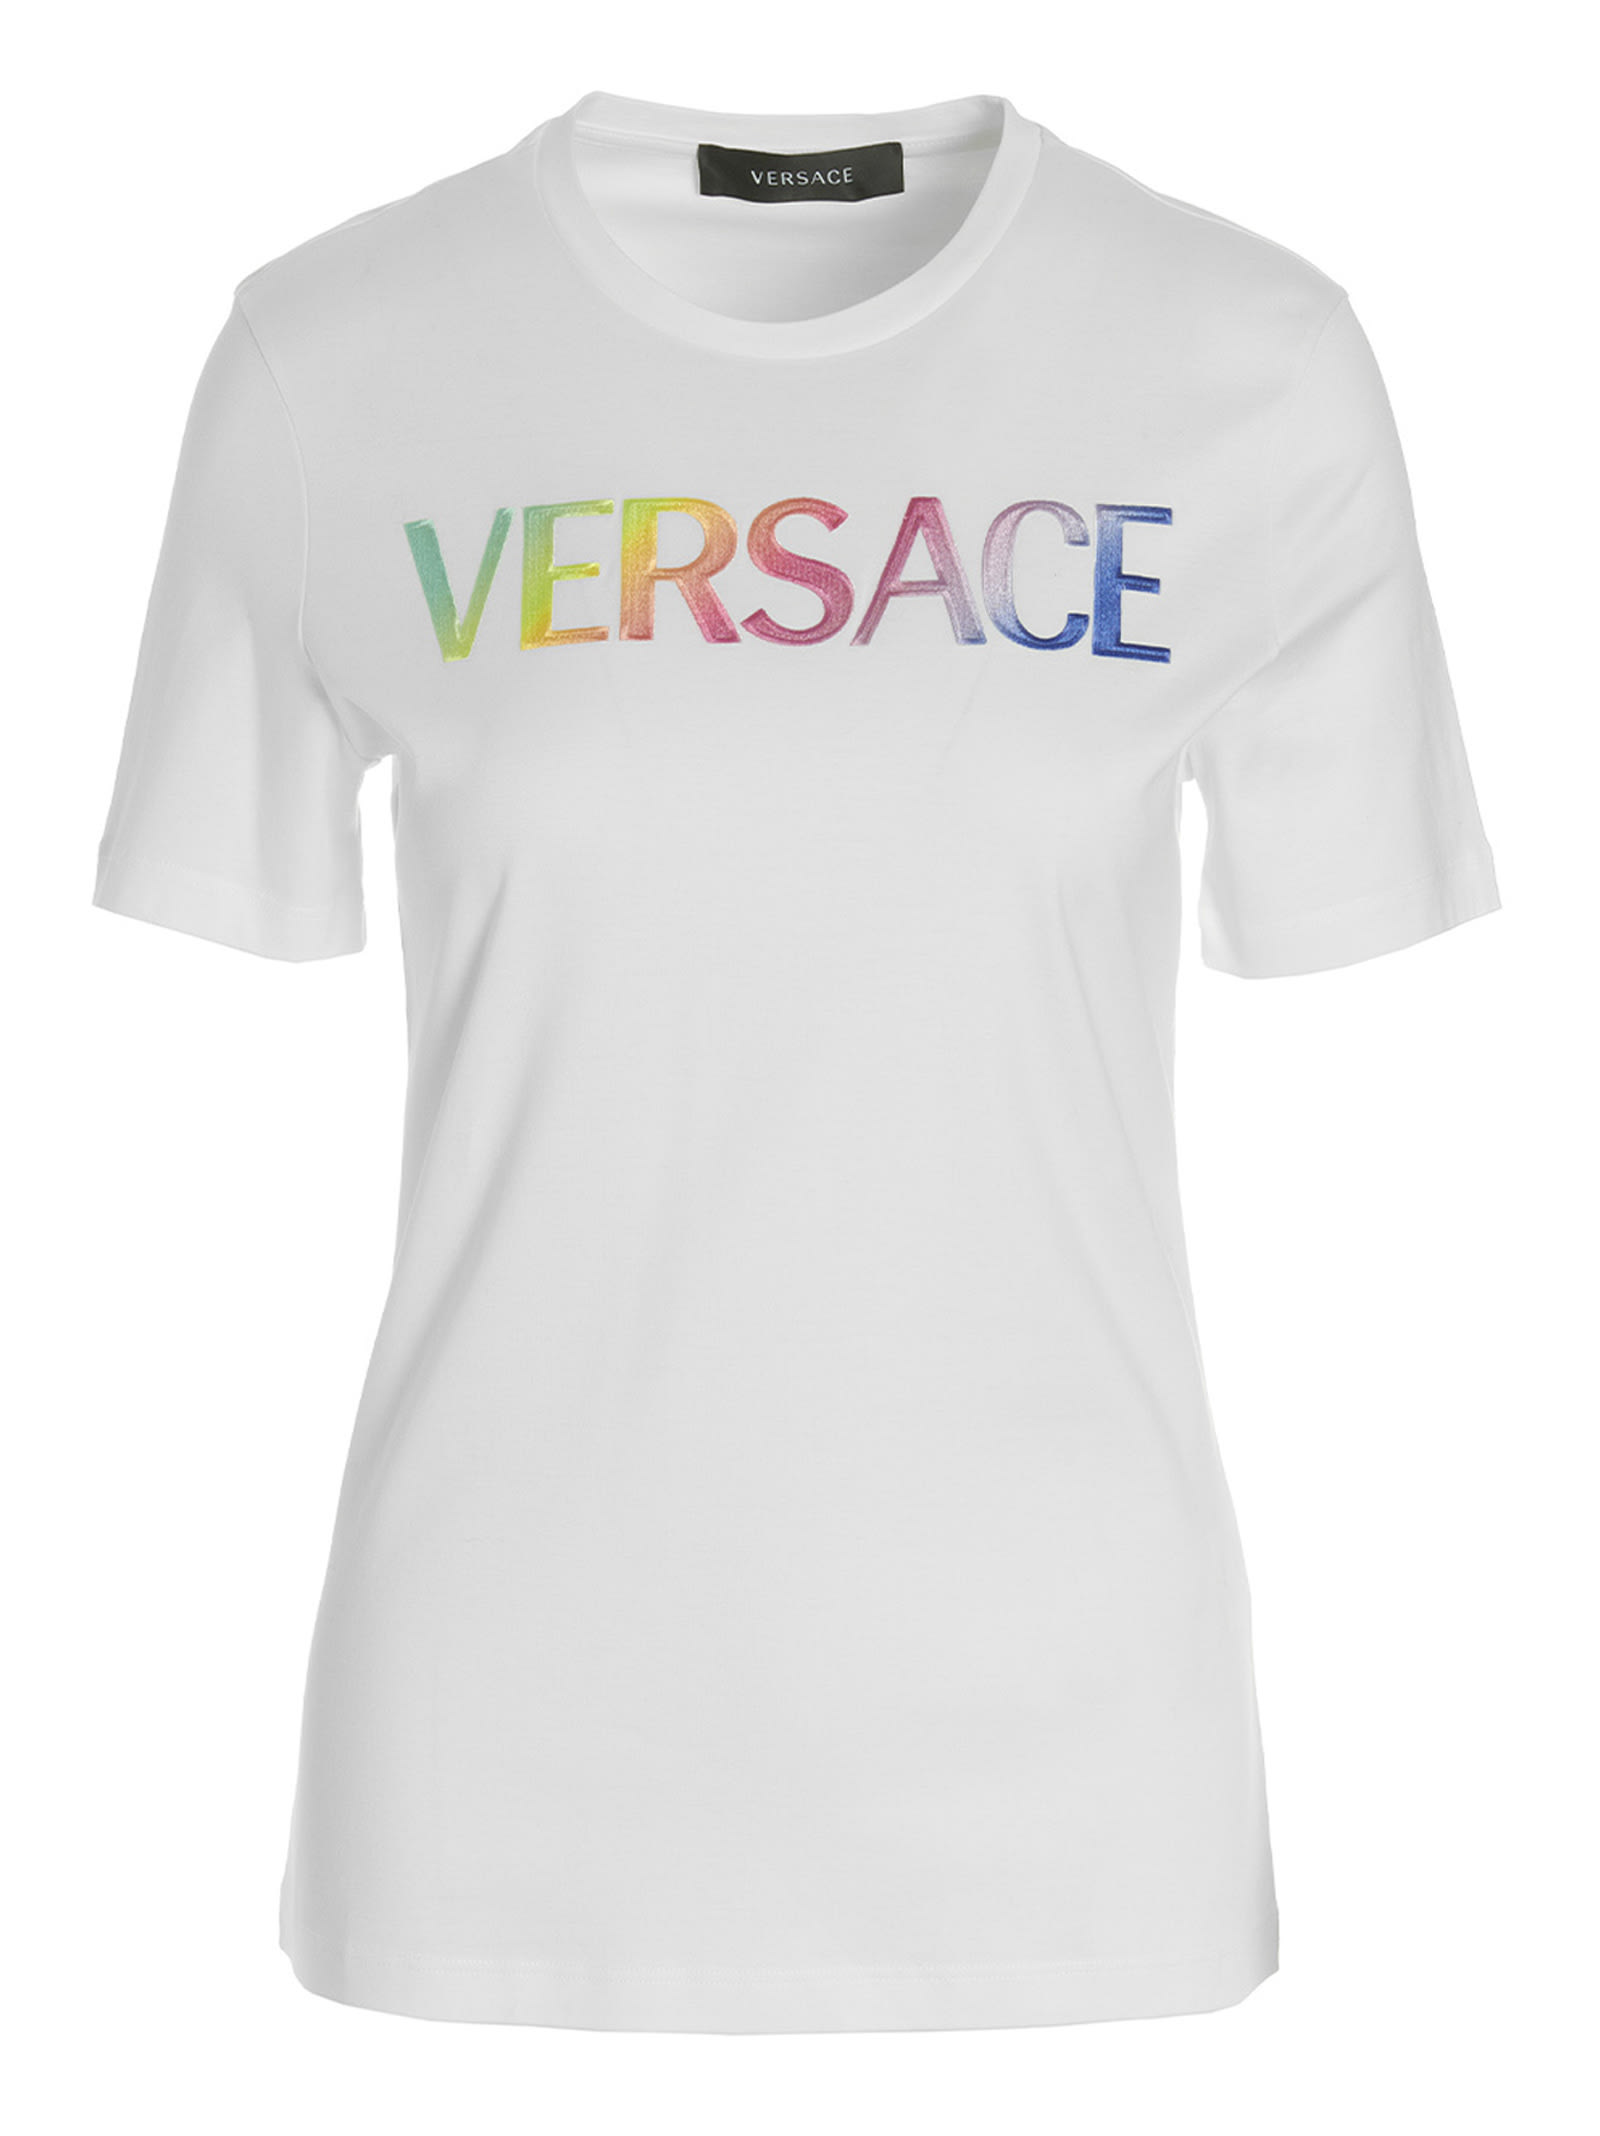 Versace logo Rainbow T-shirt